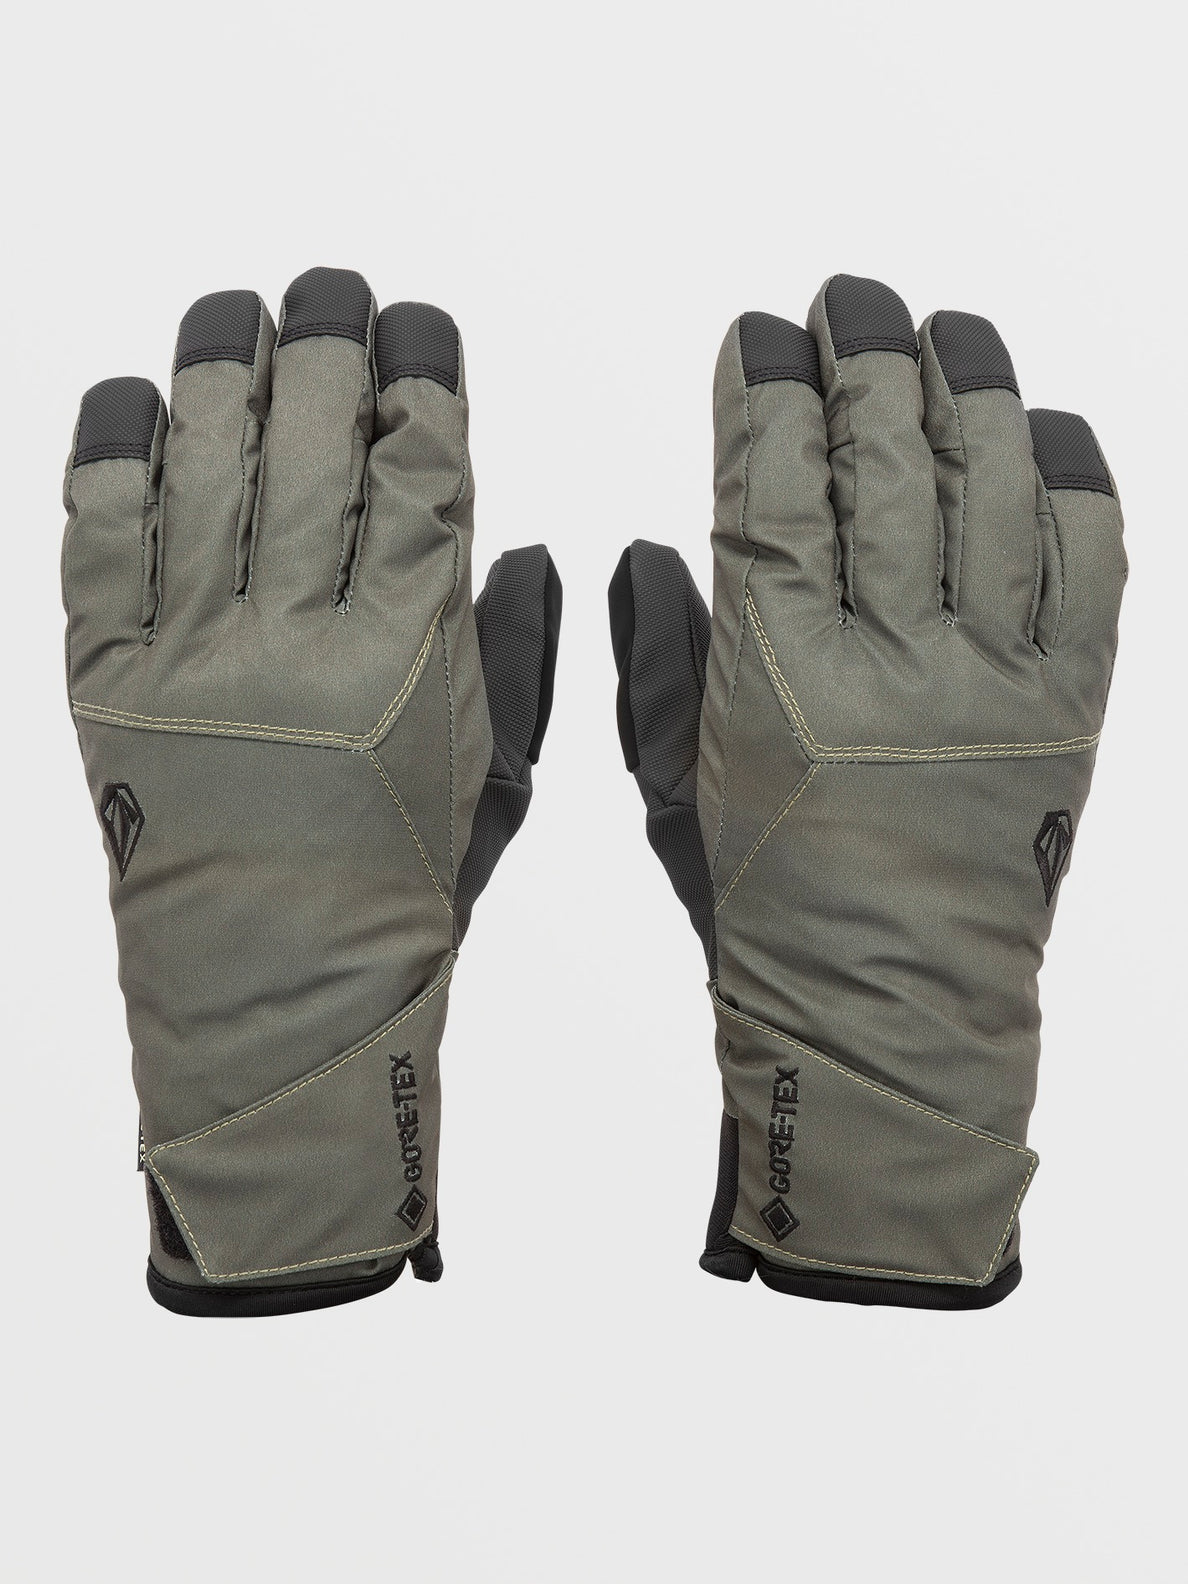 Volcom CP 2 Gore-Tex Men's Gloves - 88 Gear